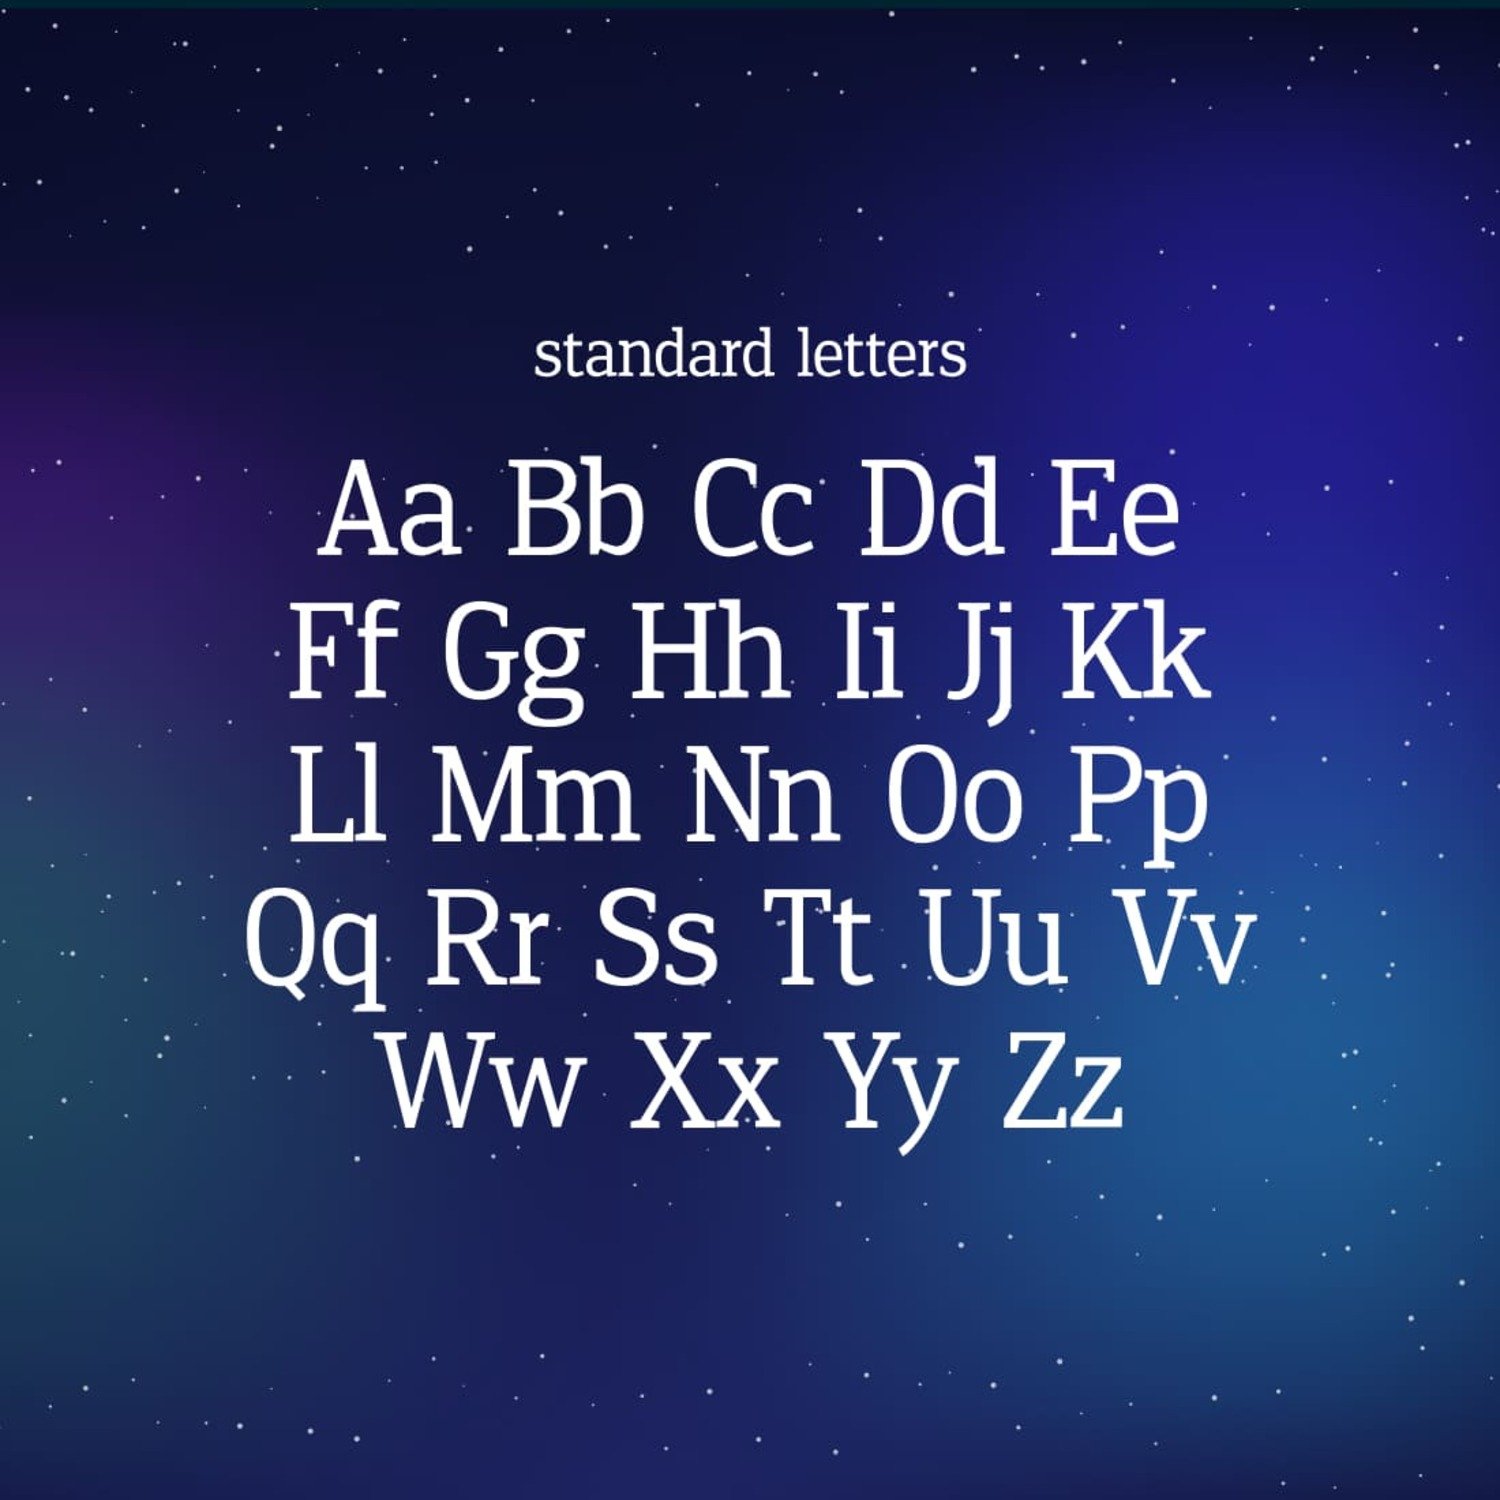 Aurora Monospaced Serif Font cover image.